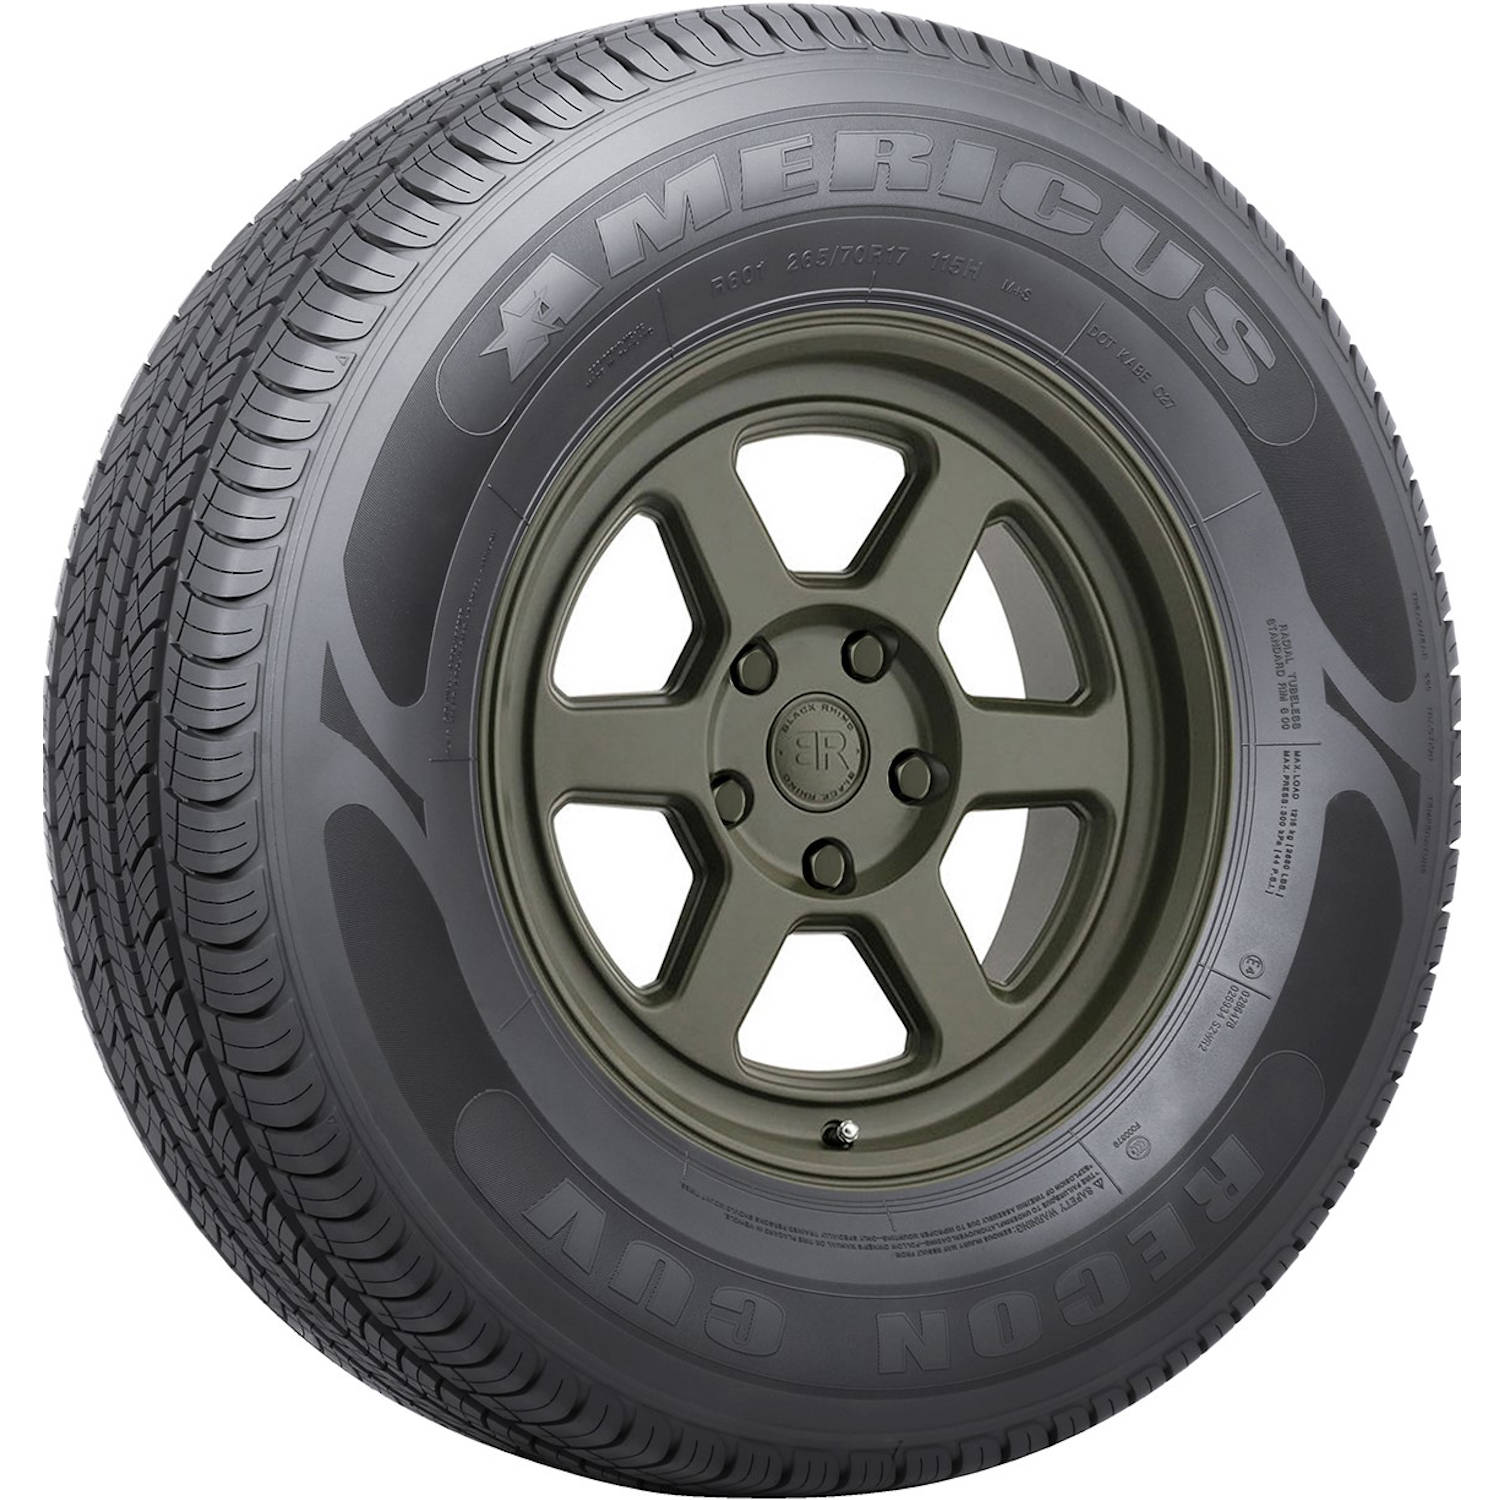 AMERICUS RECON CUV 235/60R18 XL (29.1X9.3R 18) Tires